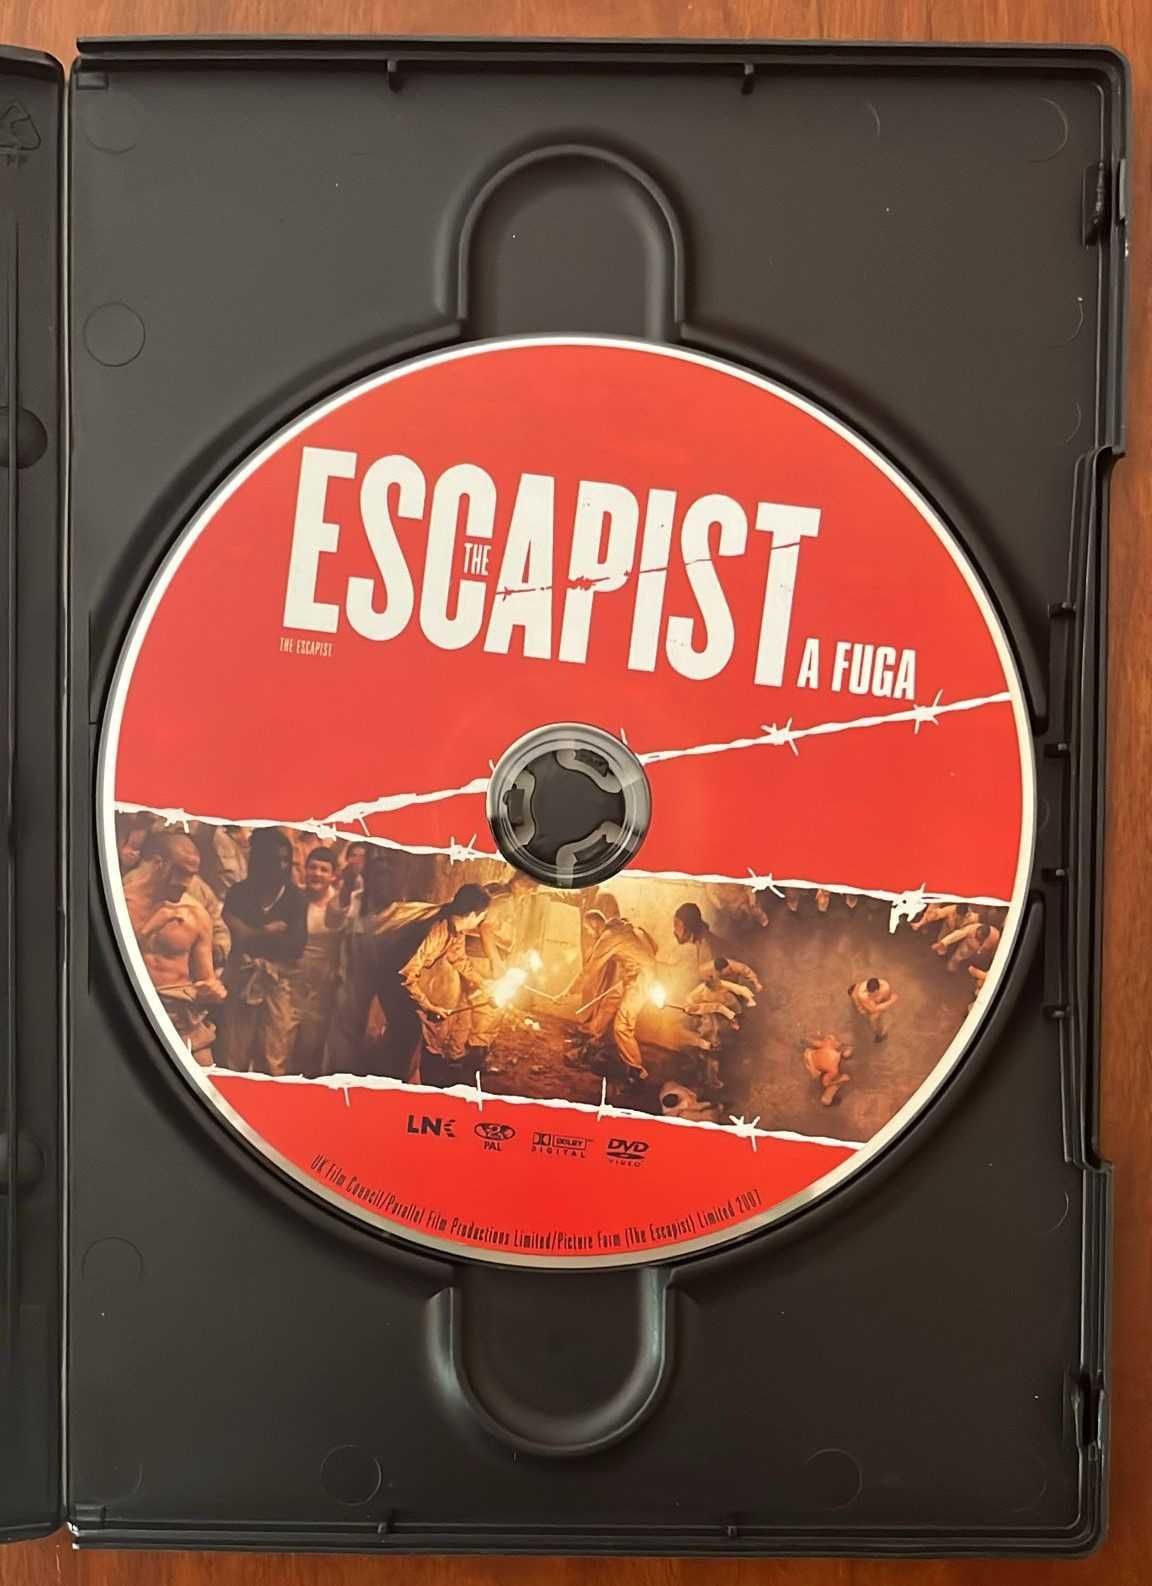 DVD "The Escapist - A Fuga"